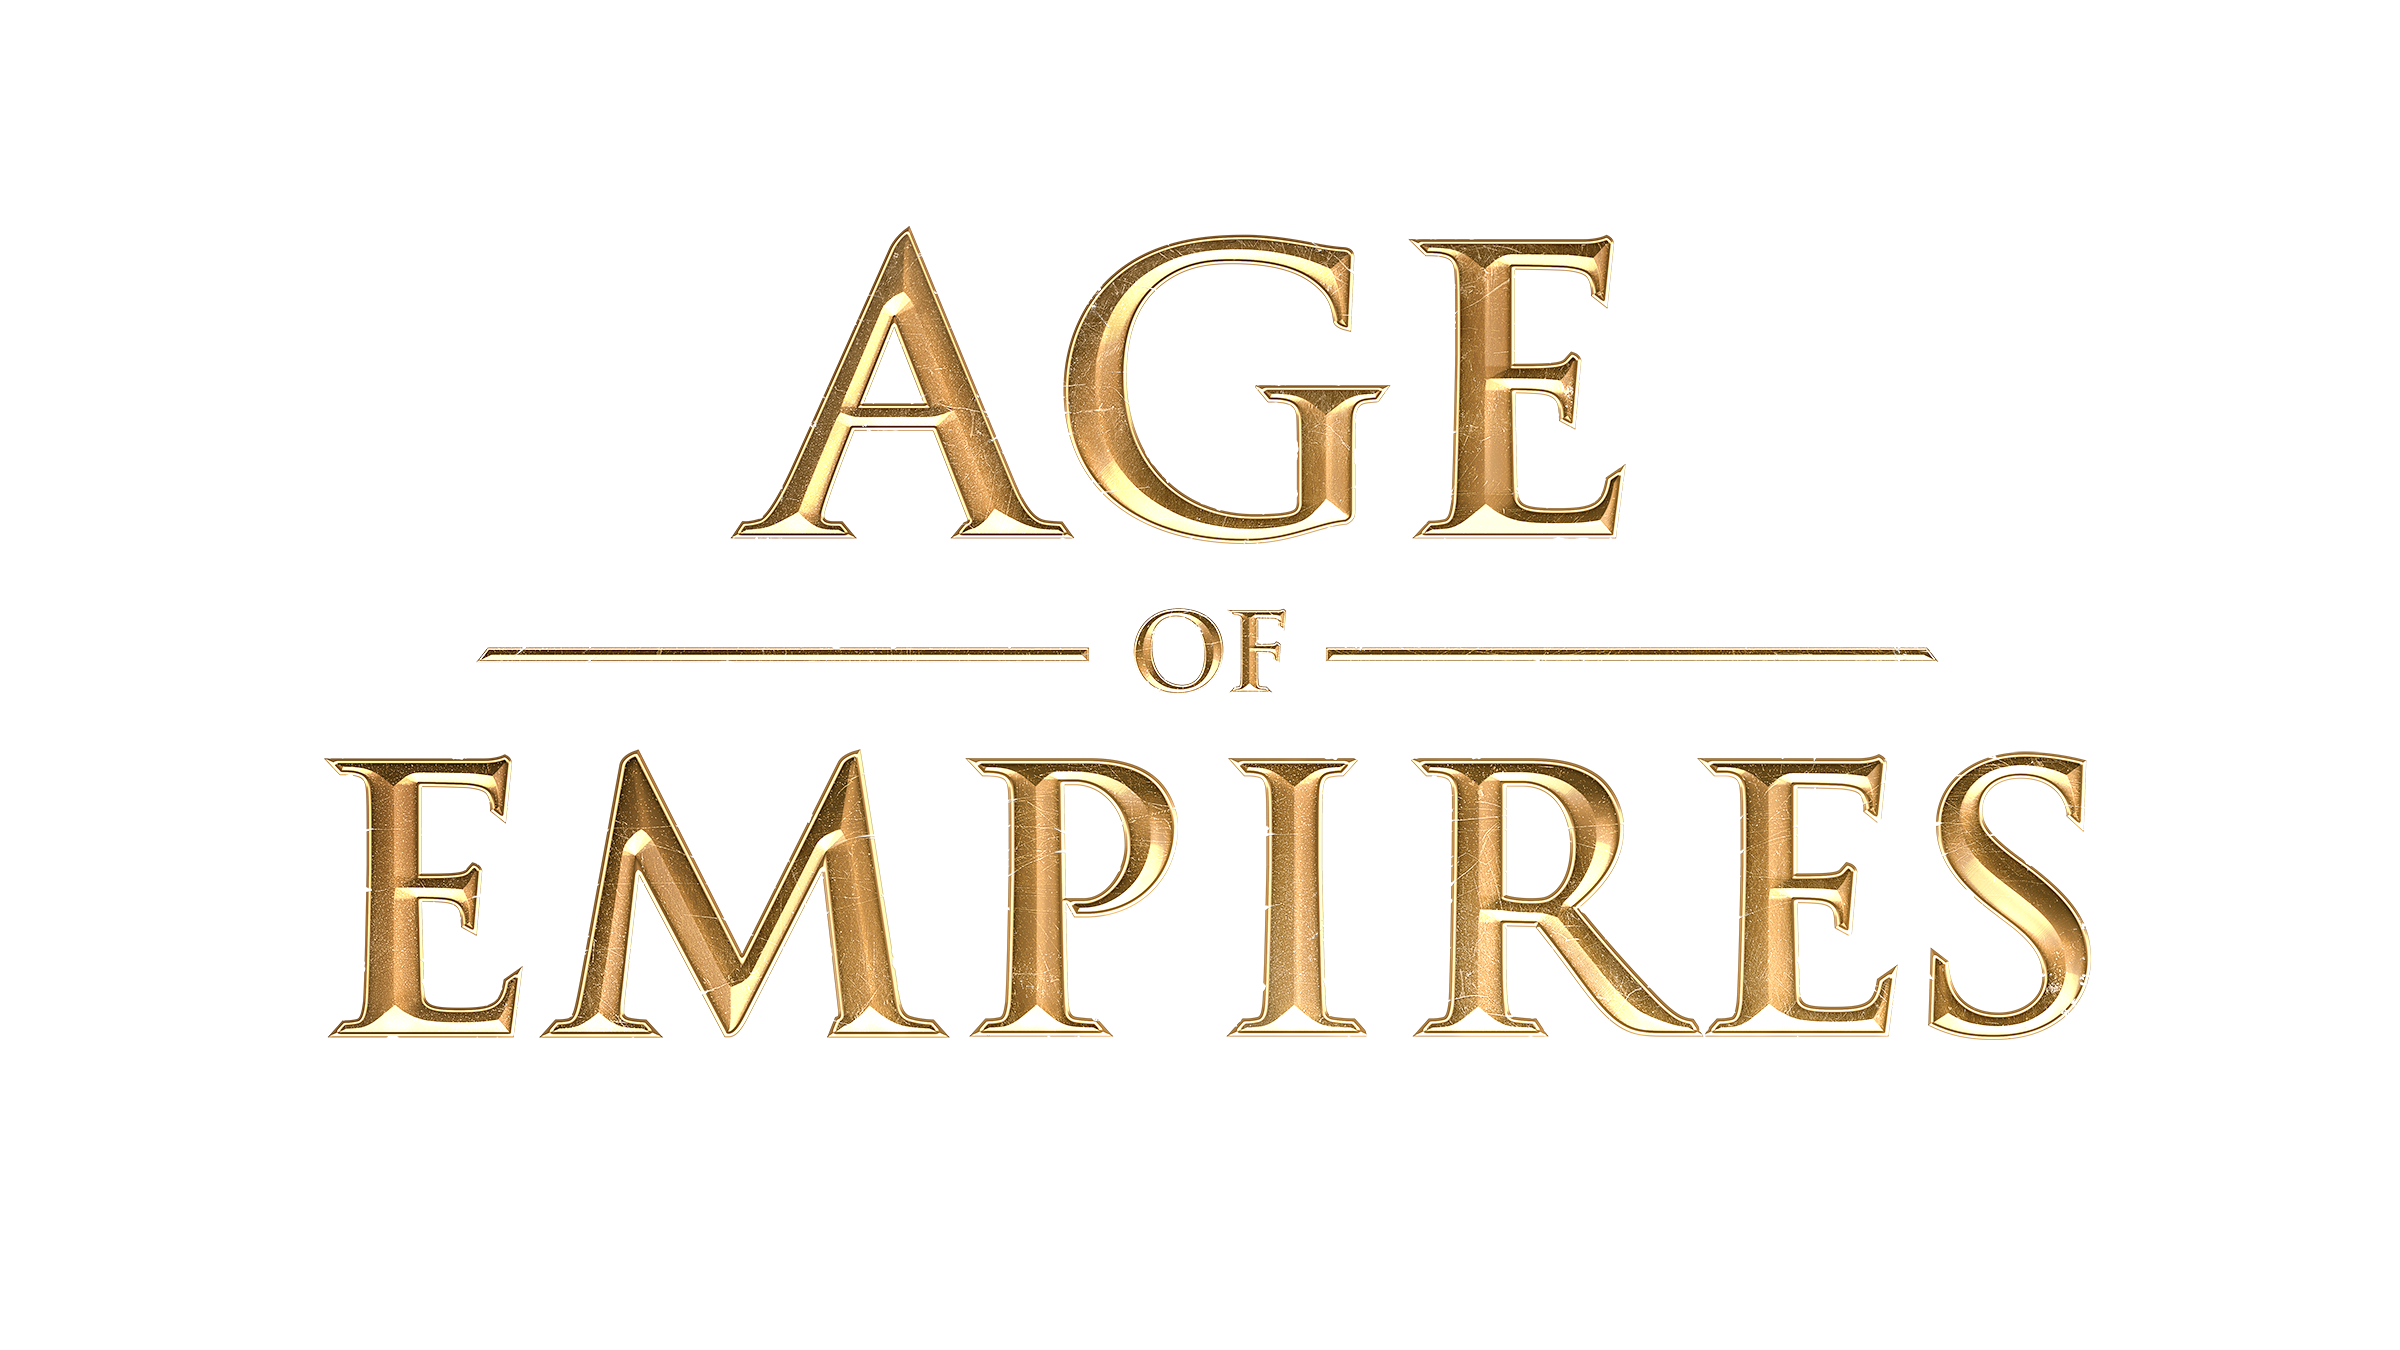 Age Of Empires 2 Definitive Edition Logo